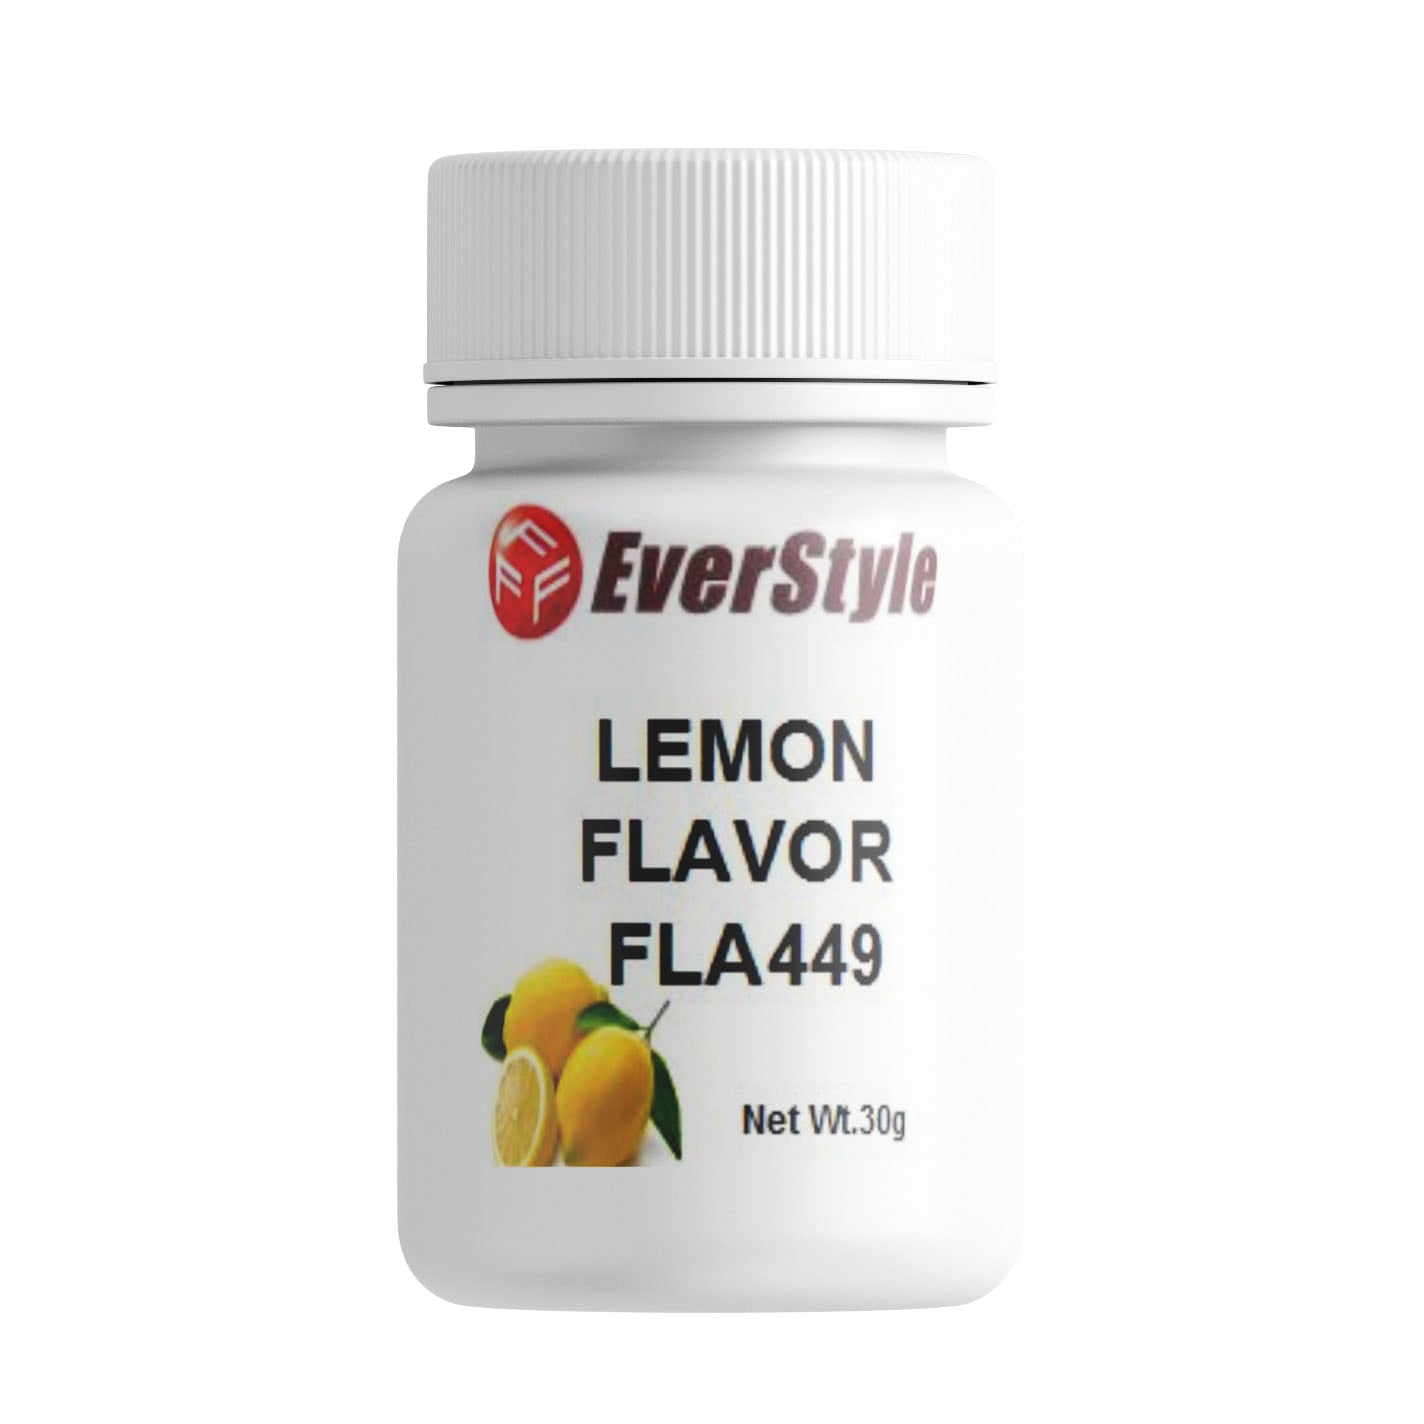 Everstyle Lemon Flavor 30g (FLA449)